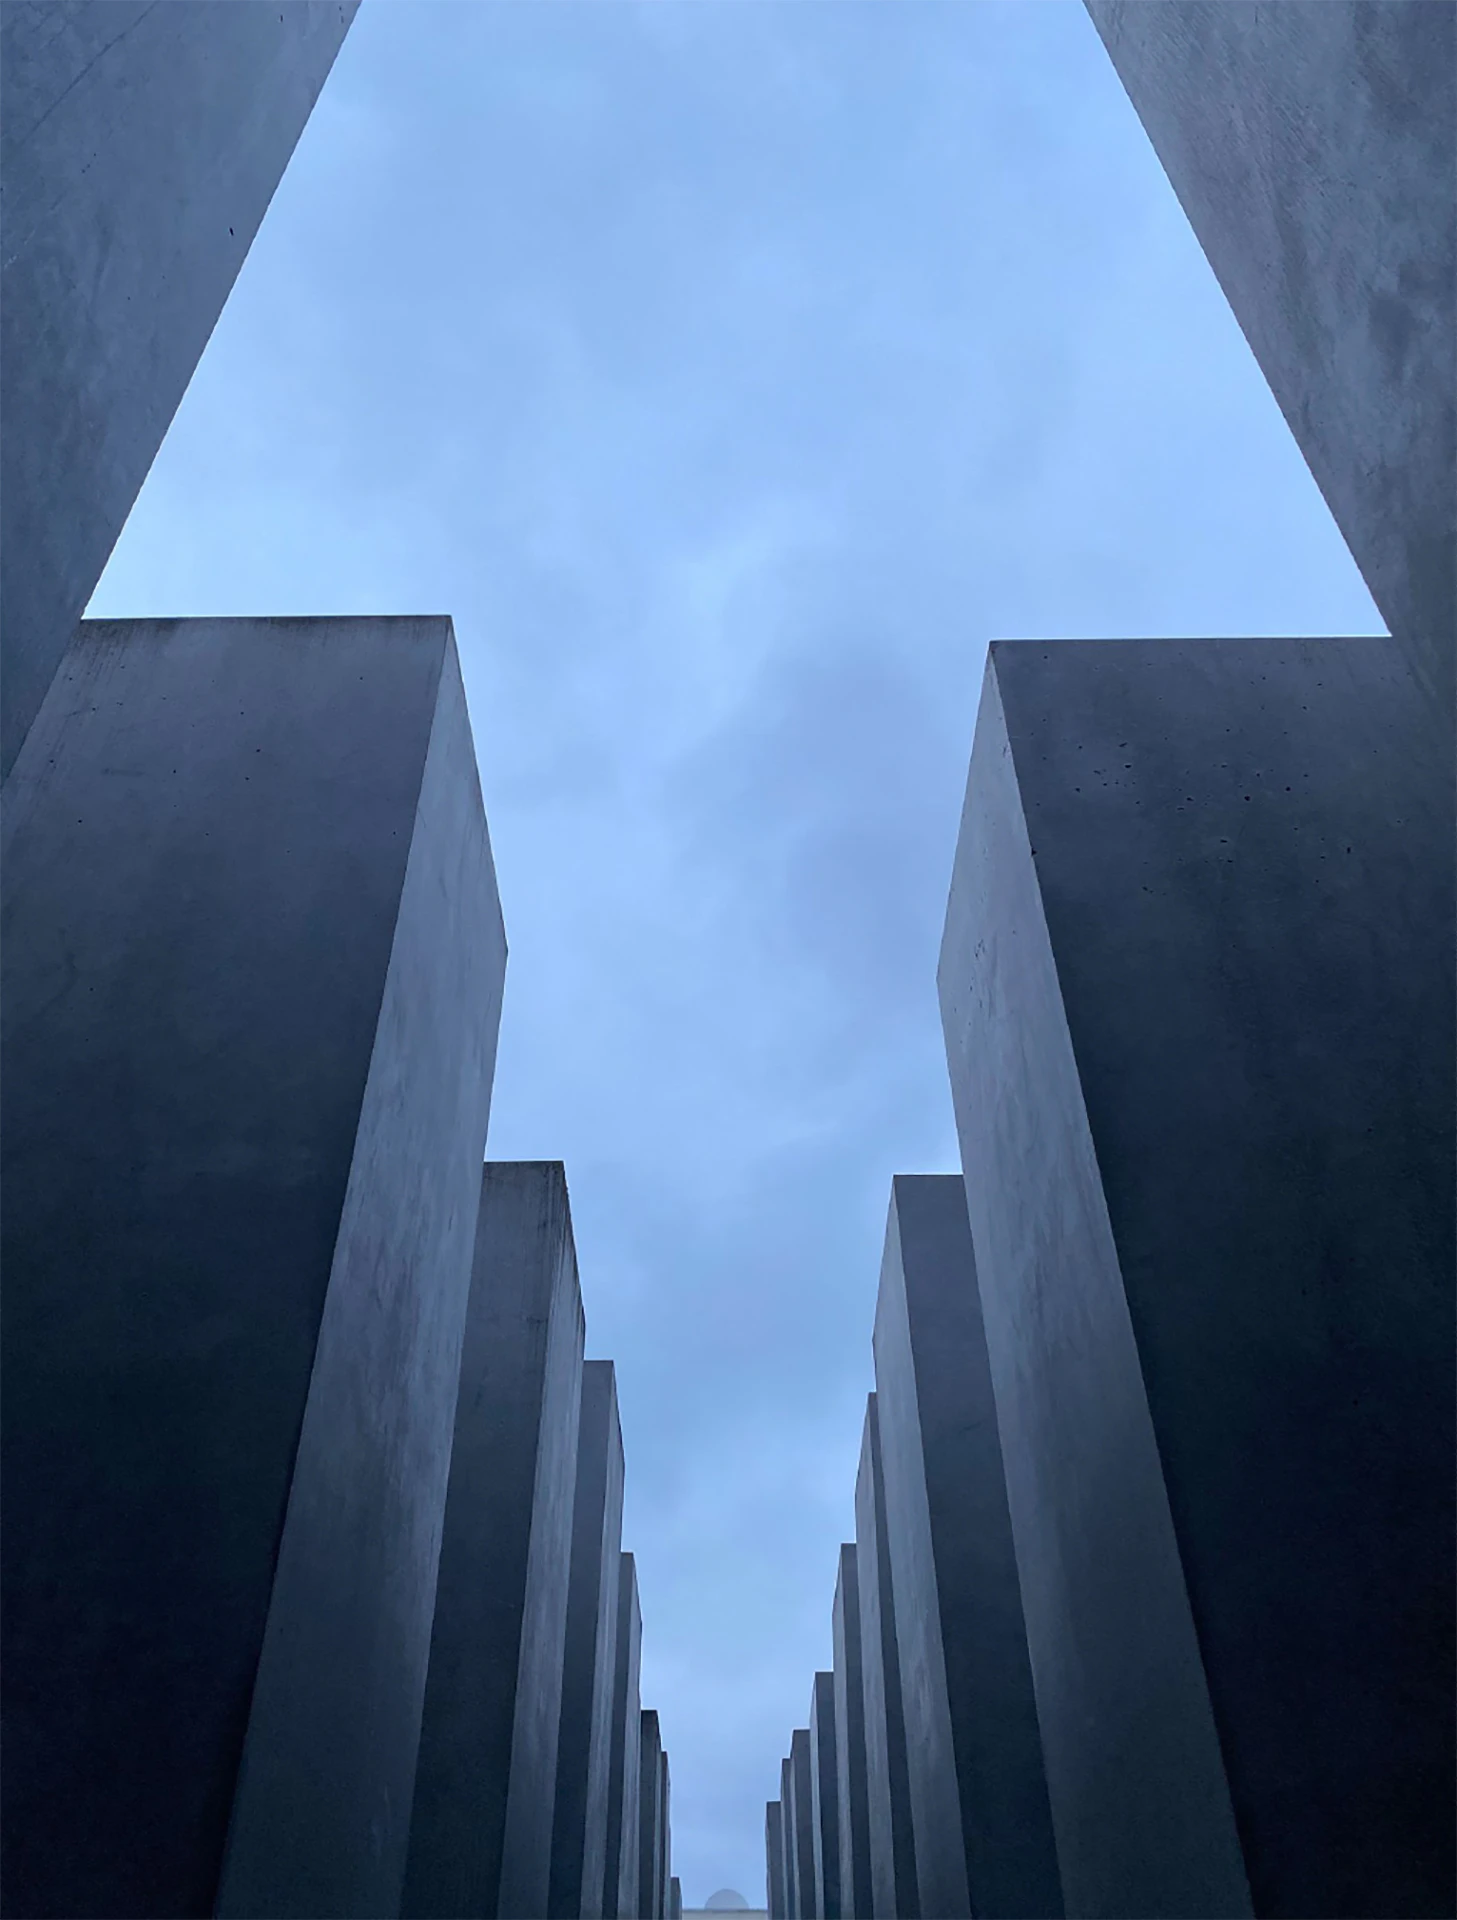 1/10/20 (Holocaust memorial sculpture, Berlin)